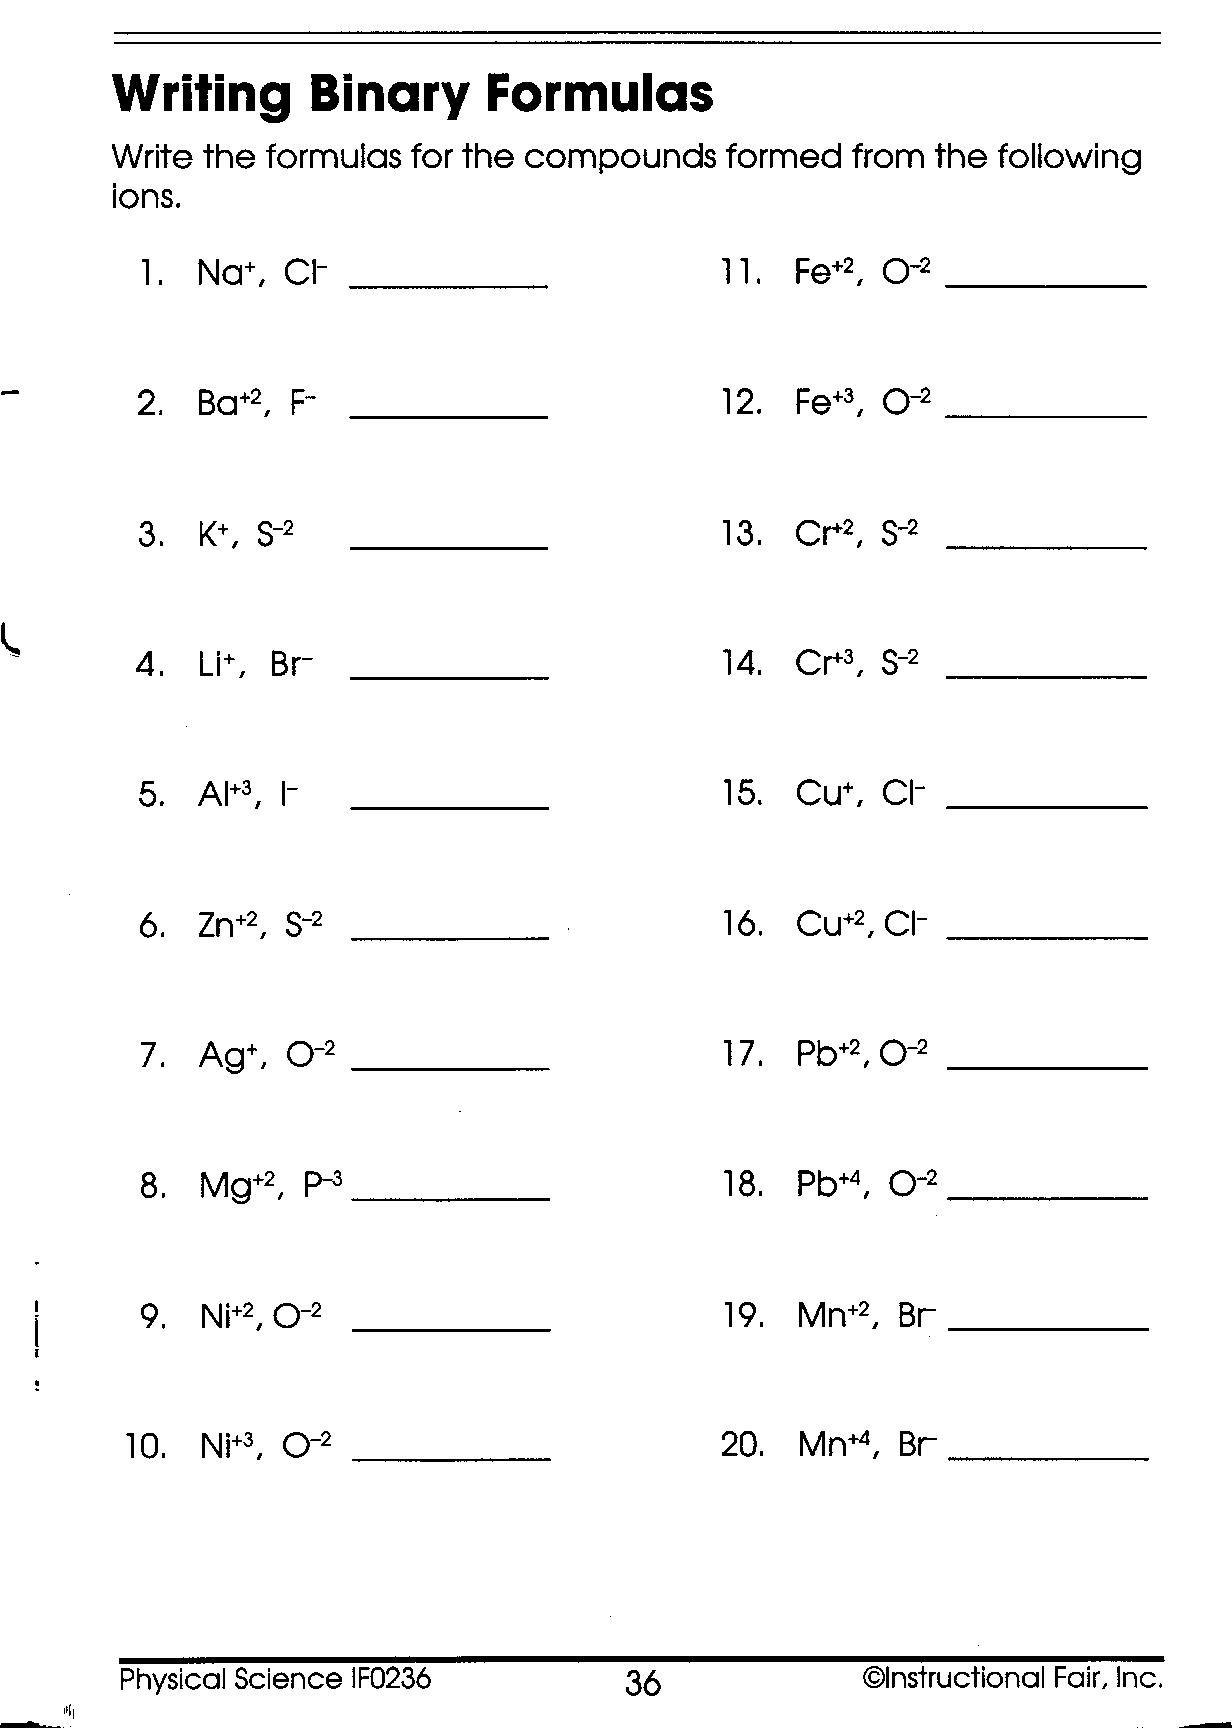 Writing Binary Formulas Worksheet Answers